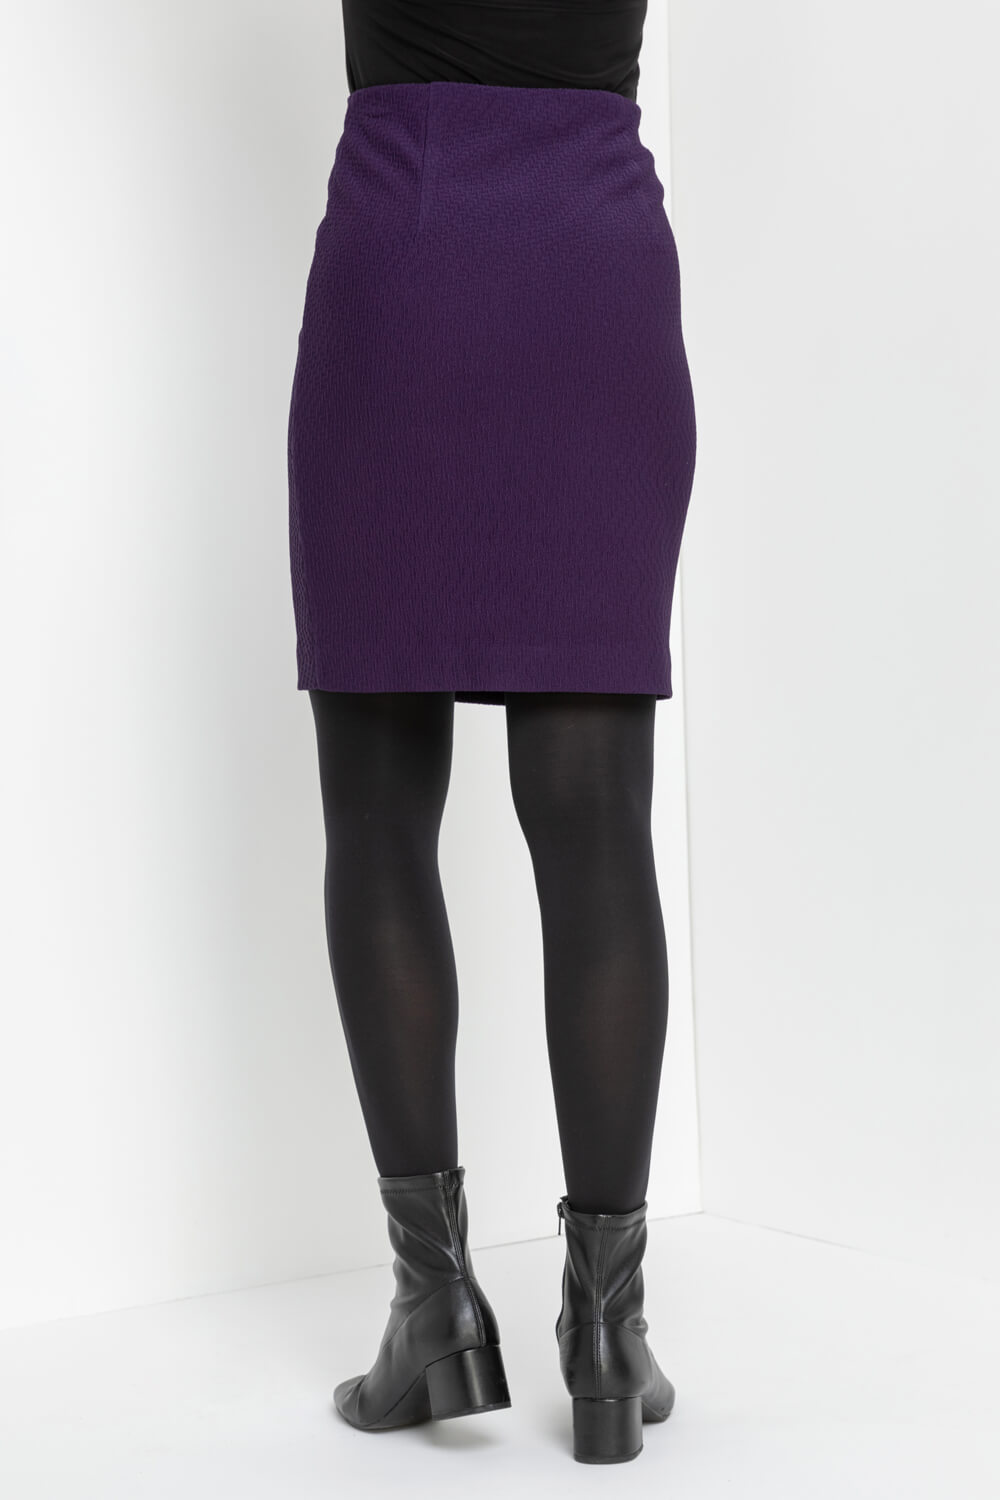 purple jersey skirt